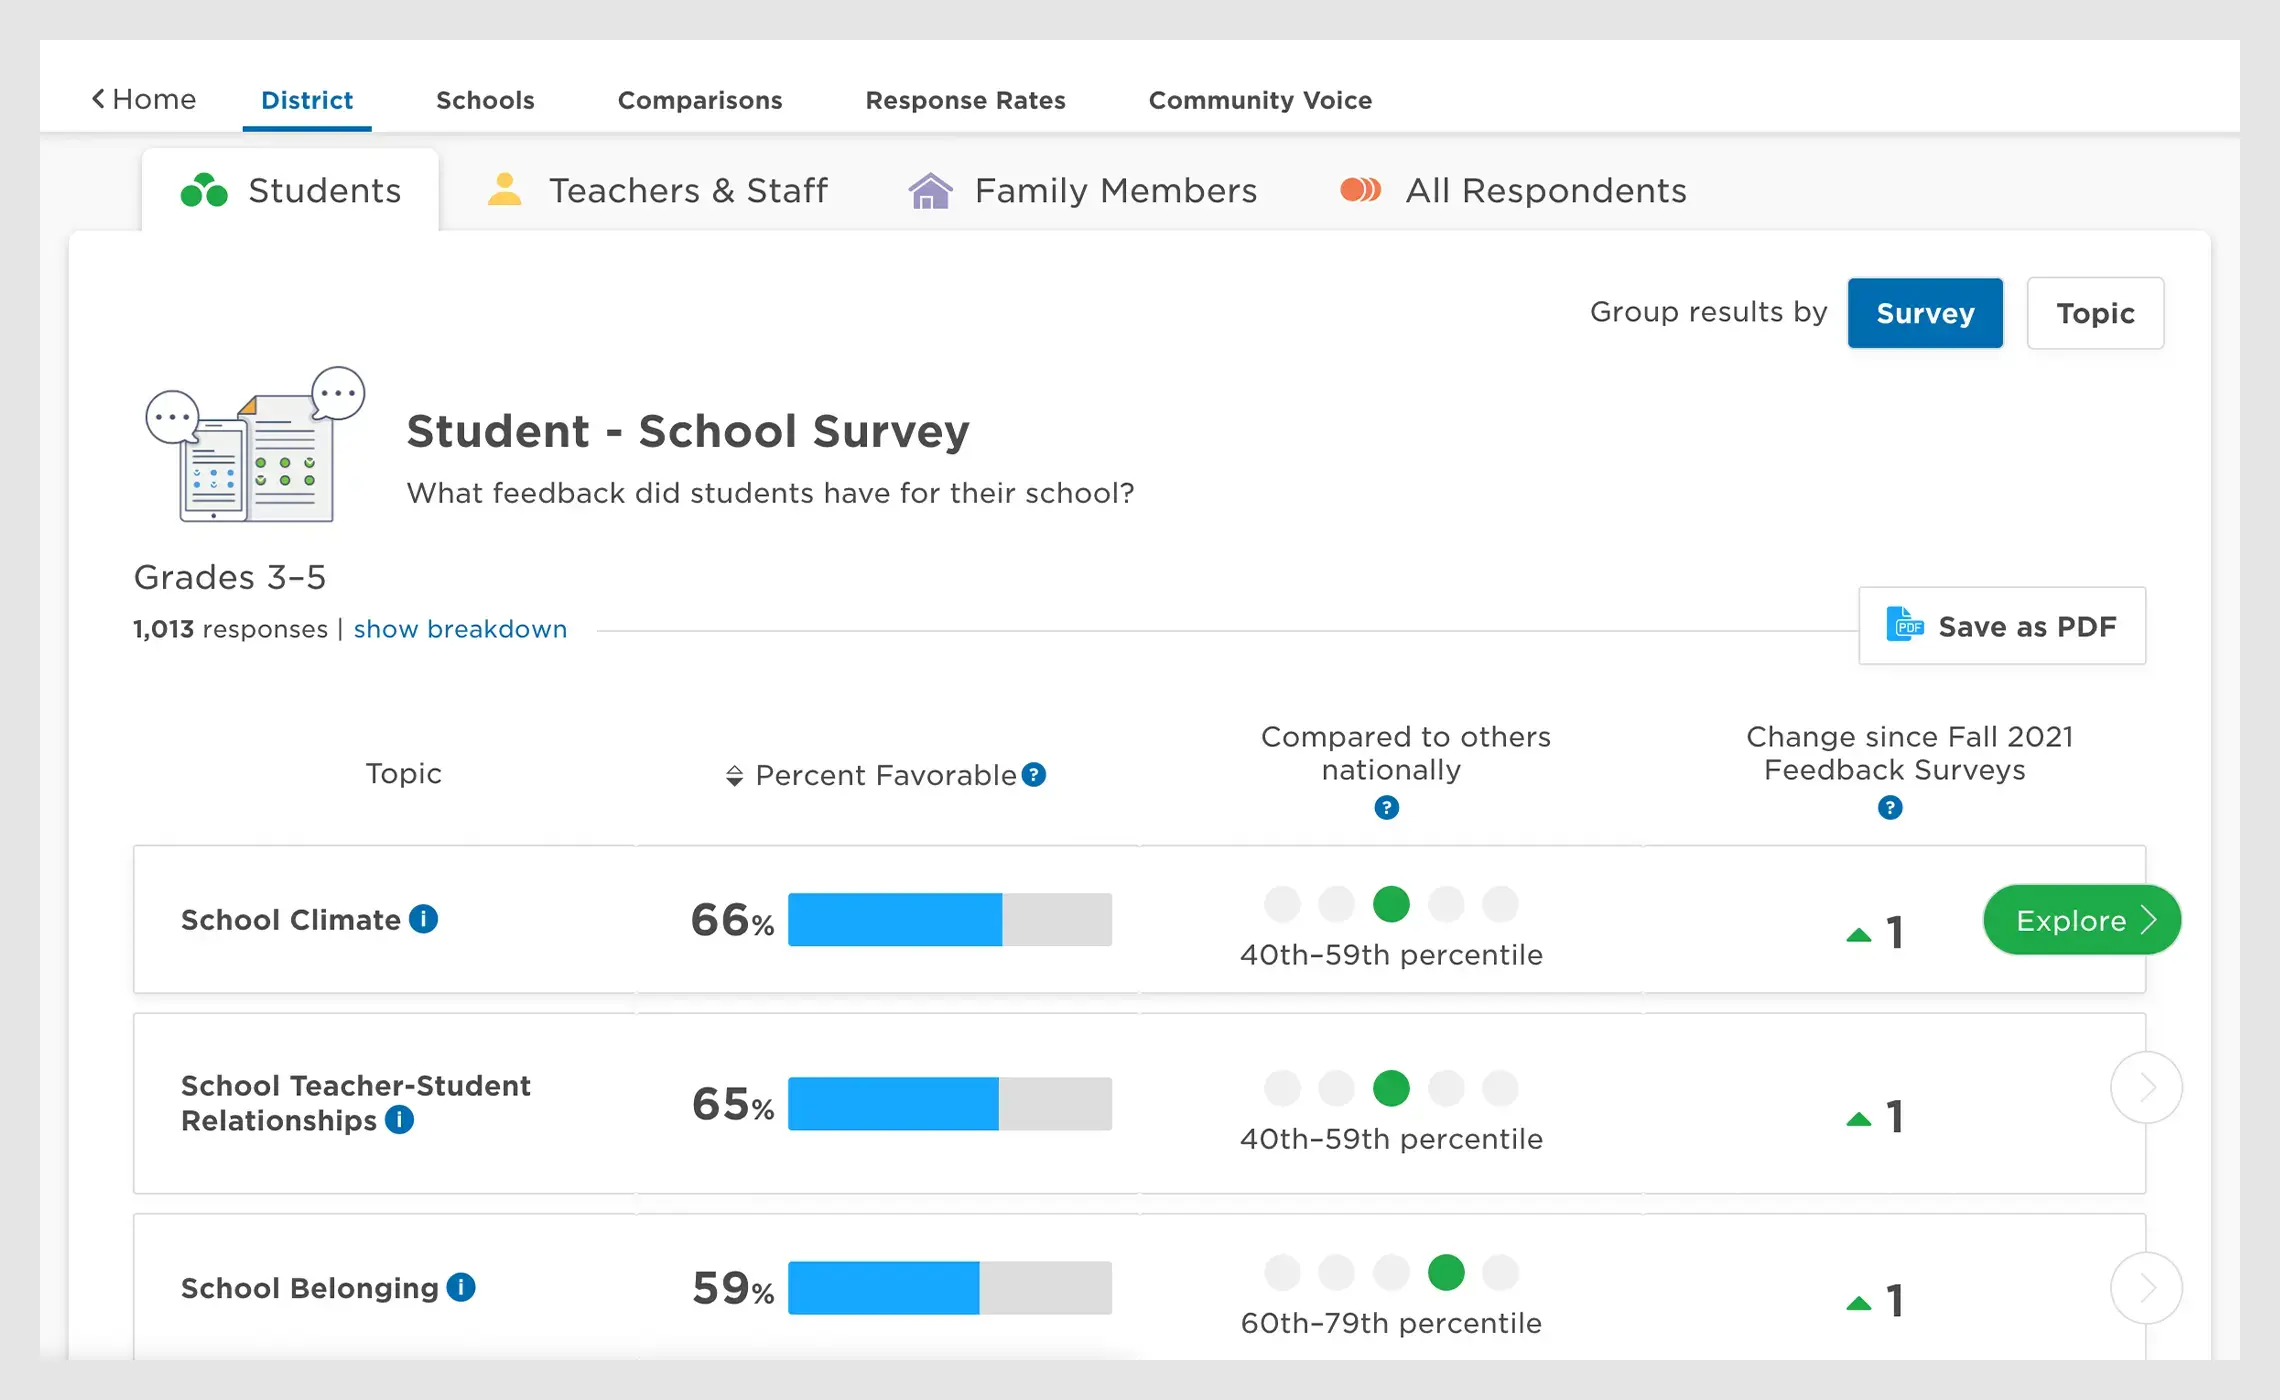 Panorama Student - School Survey